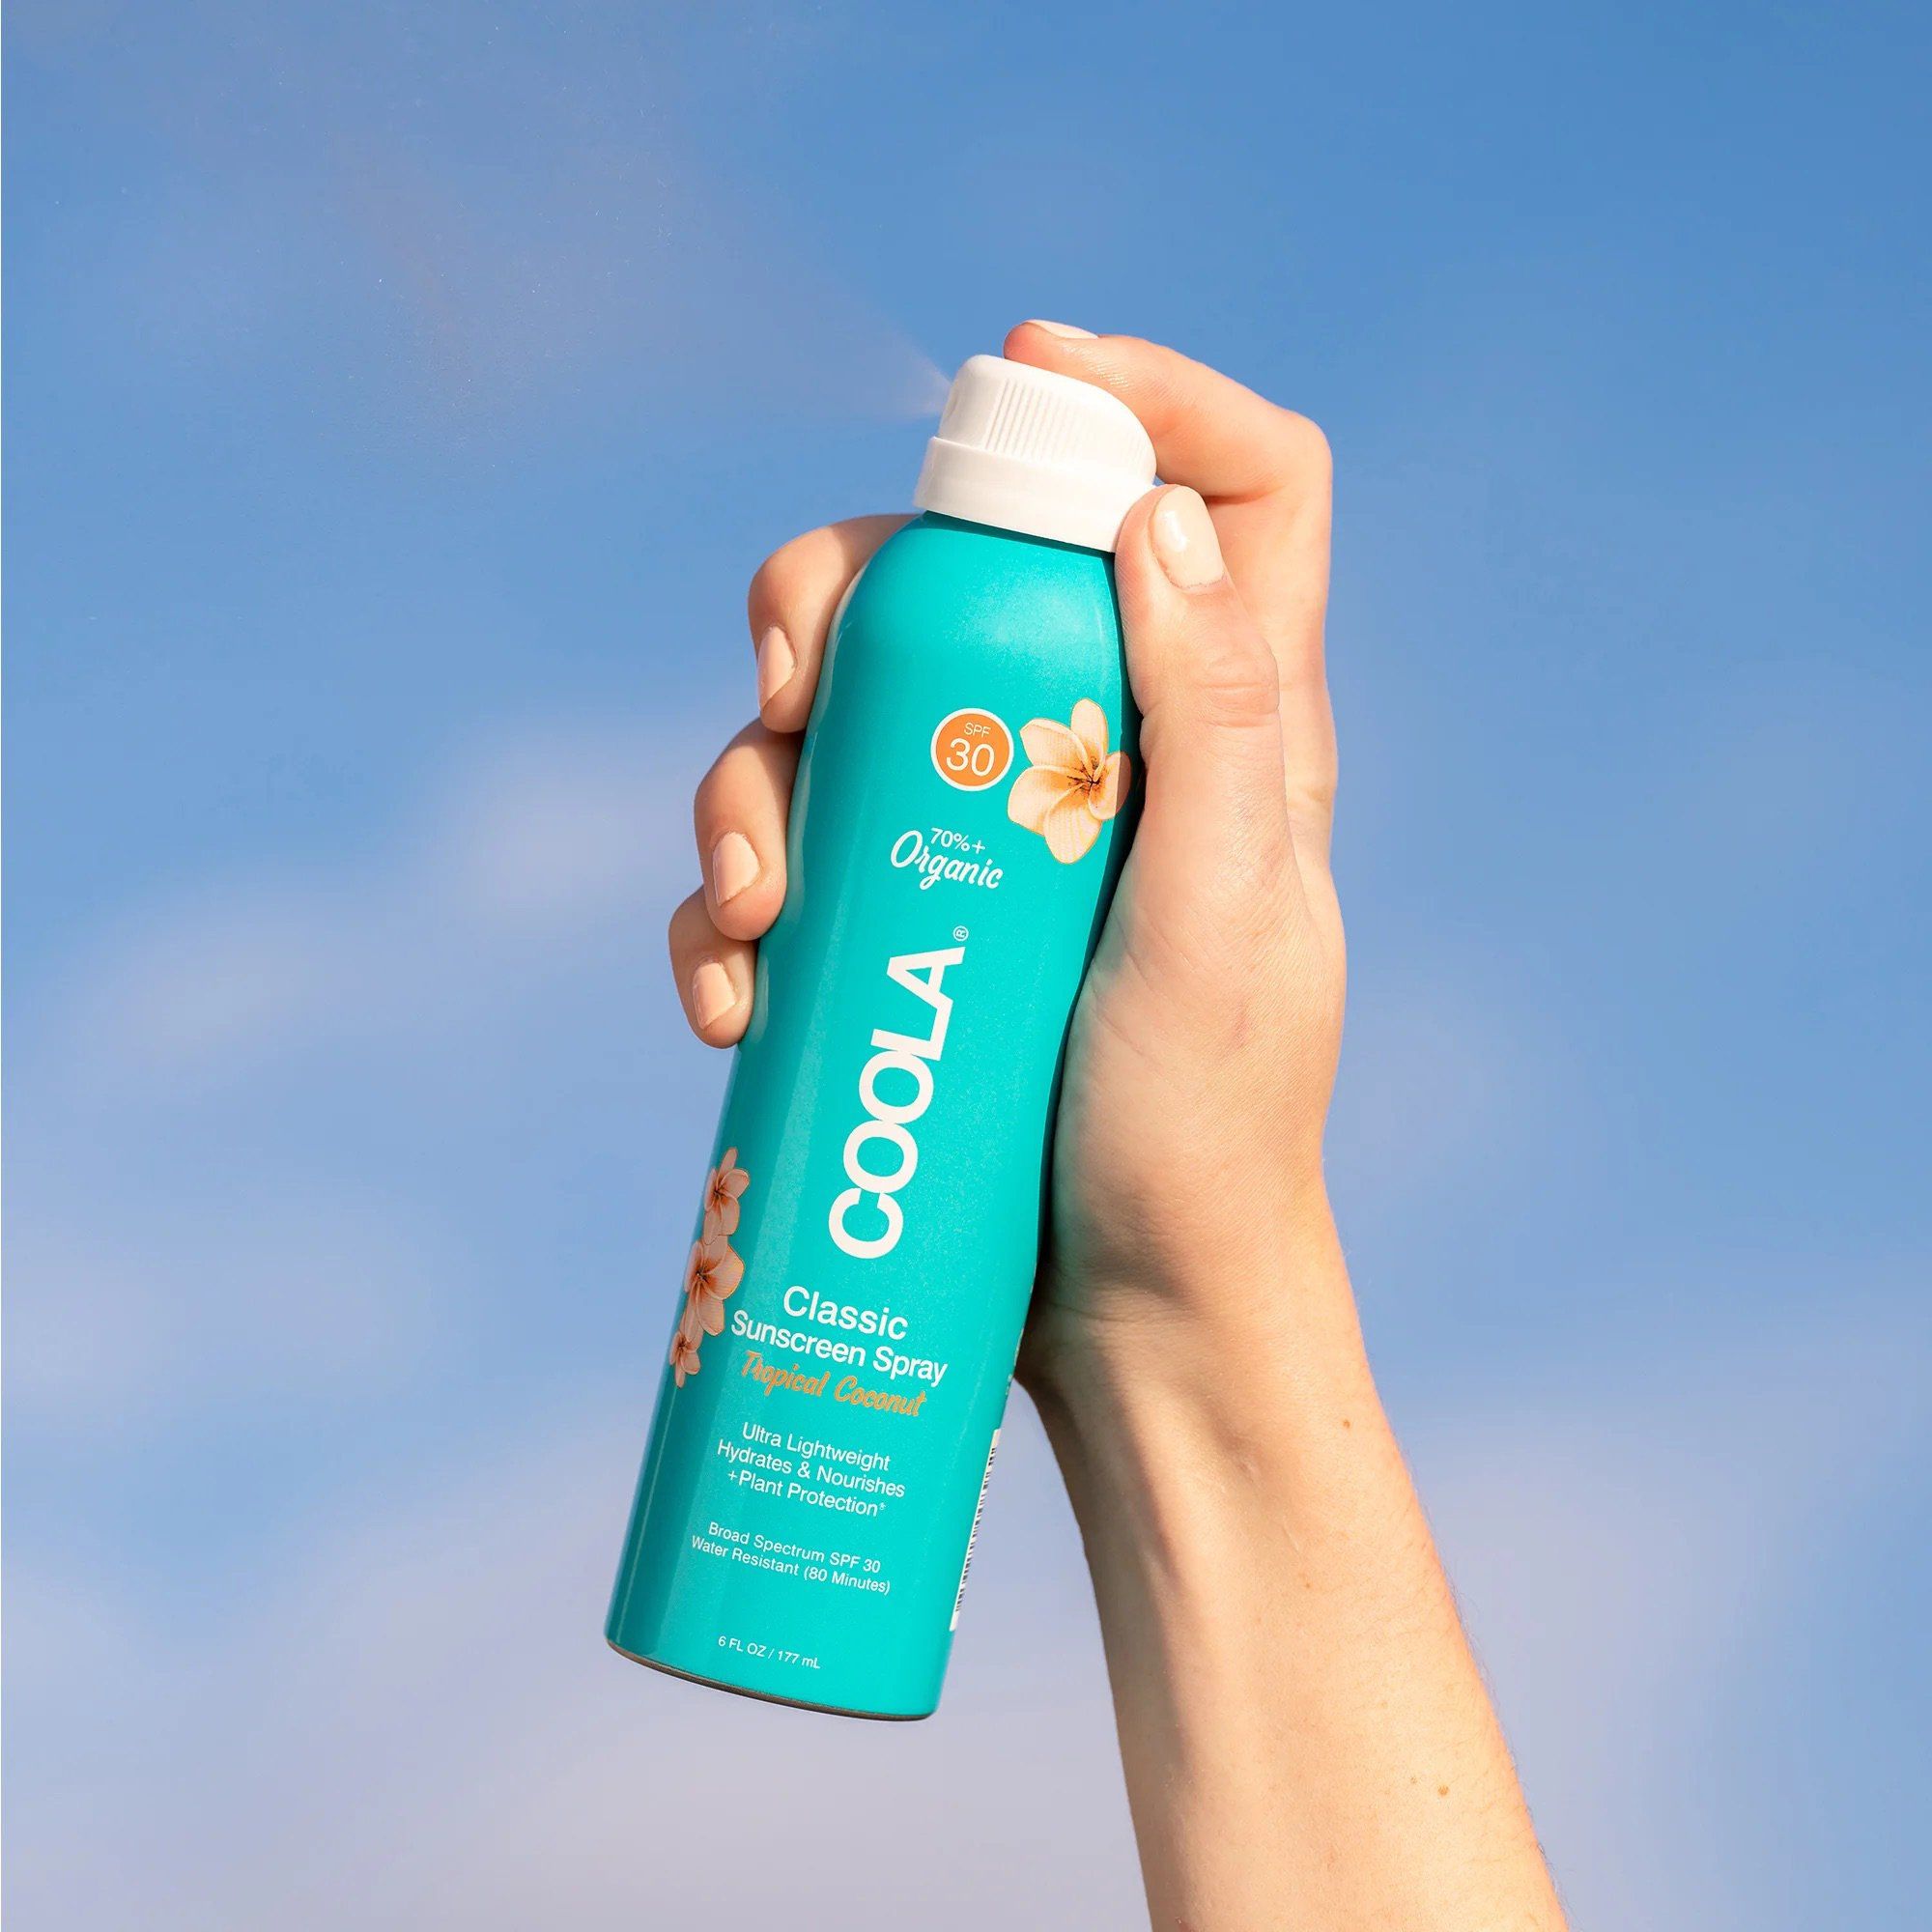 COOLA Classic Body Organic Sunscreen Spray, Tropical Coconut,  SPF 30 - 6 fl oz